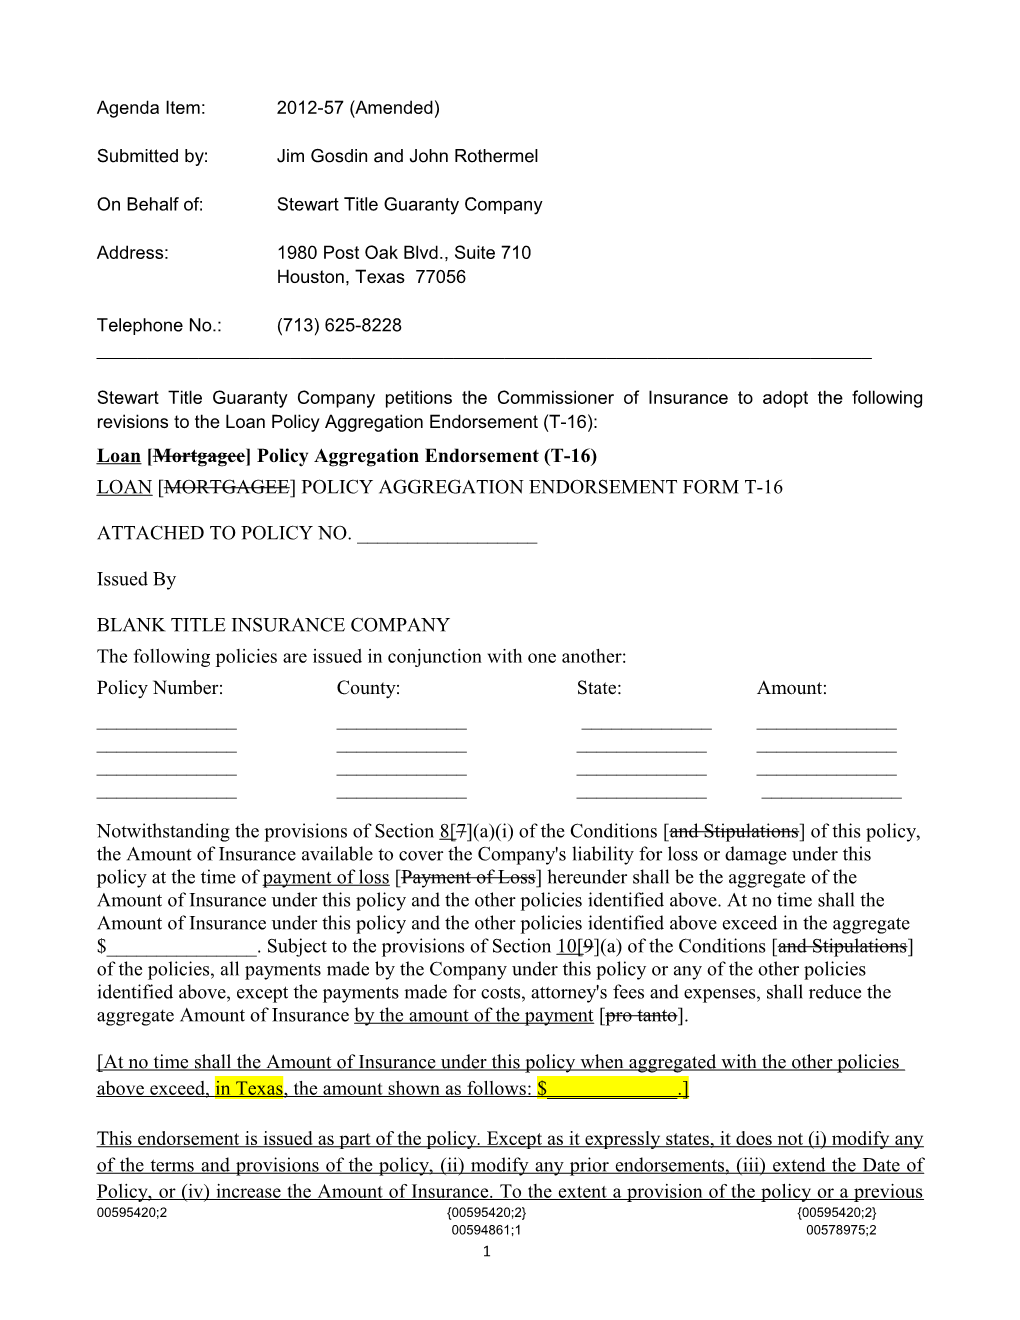 STGC Agenda Item 2012-57 (Amended) Form T-16 (00595420-2)